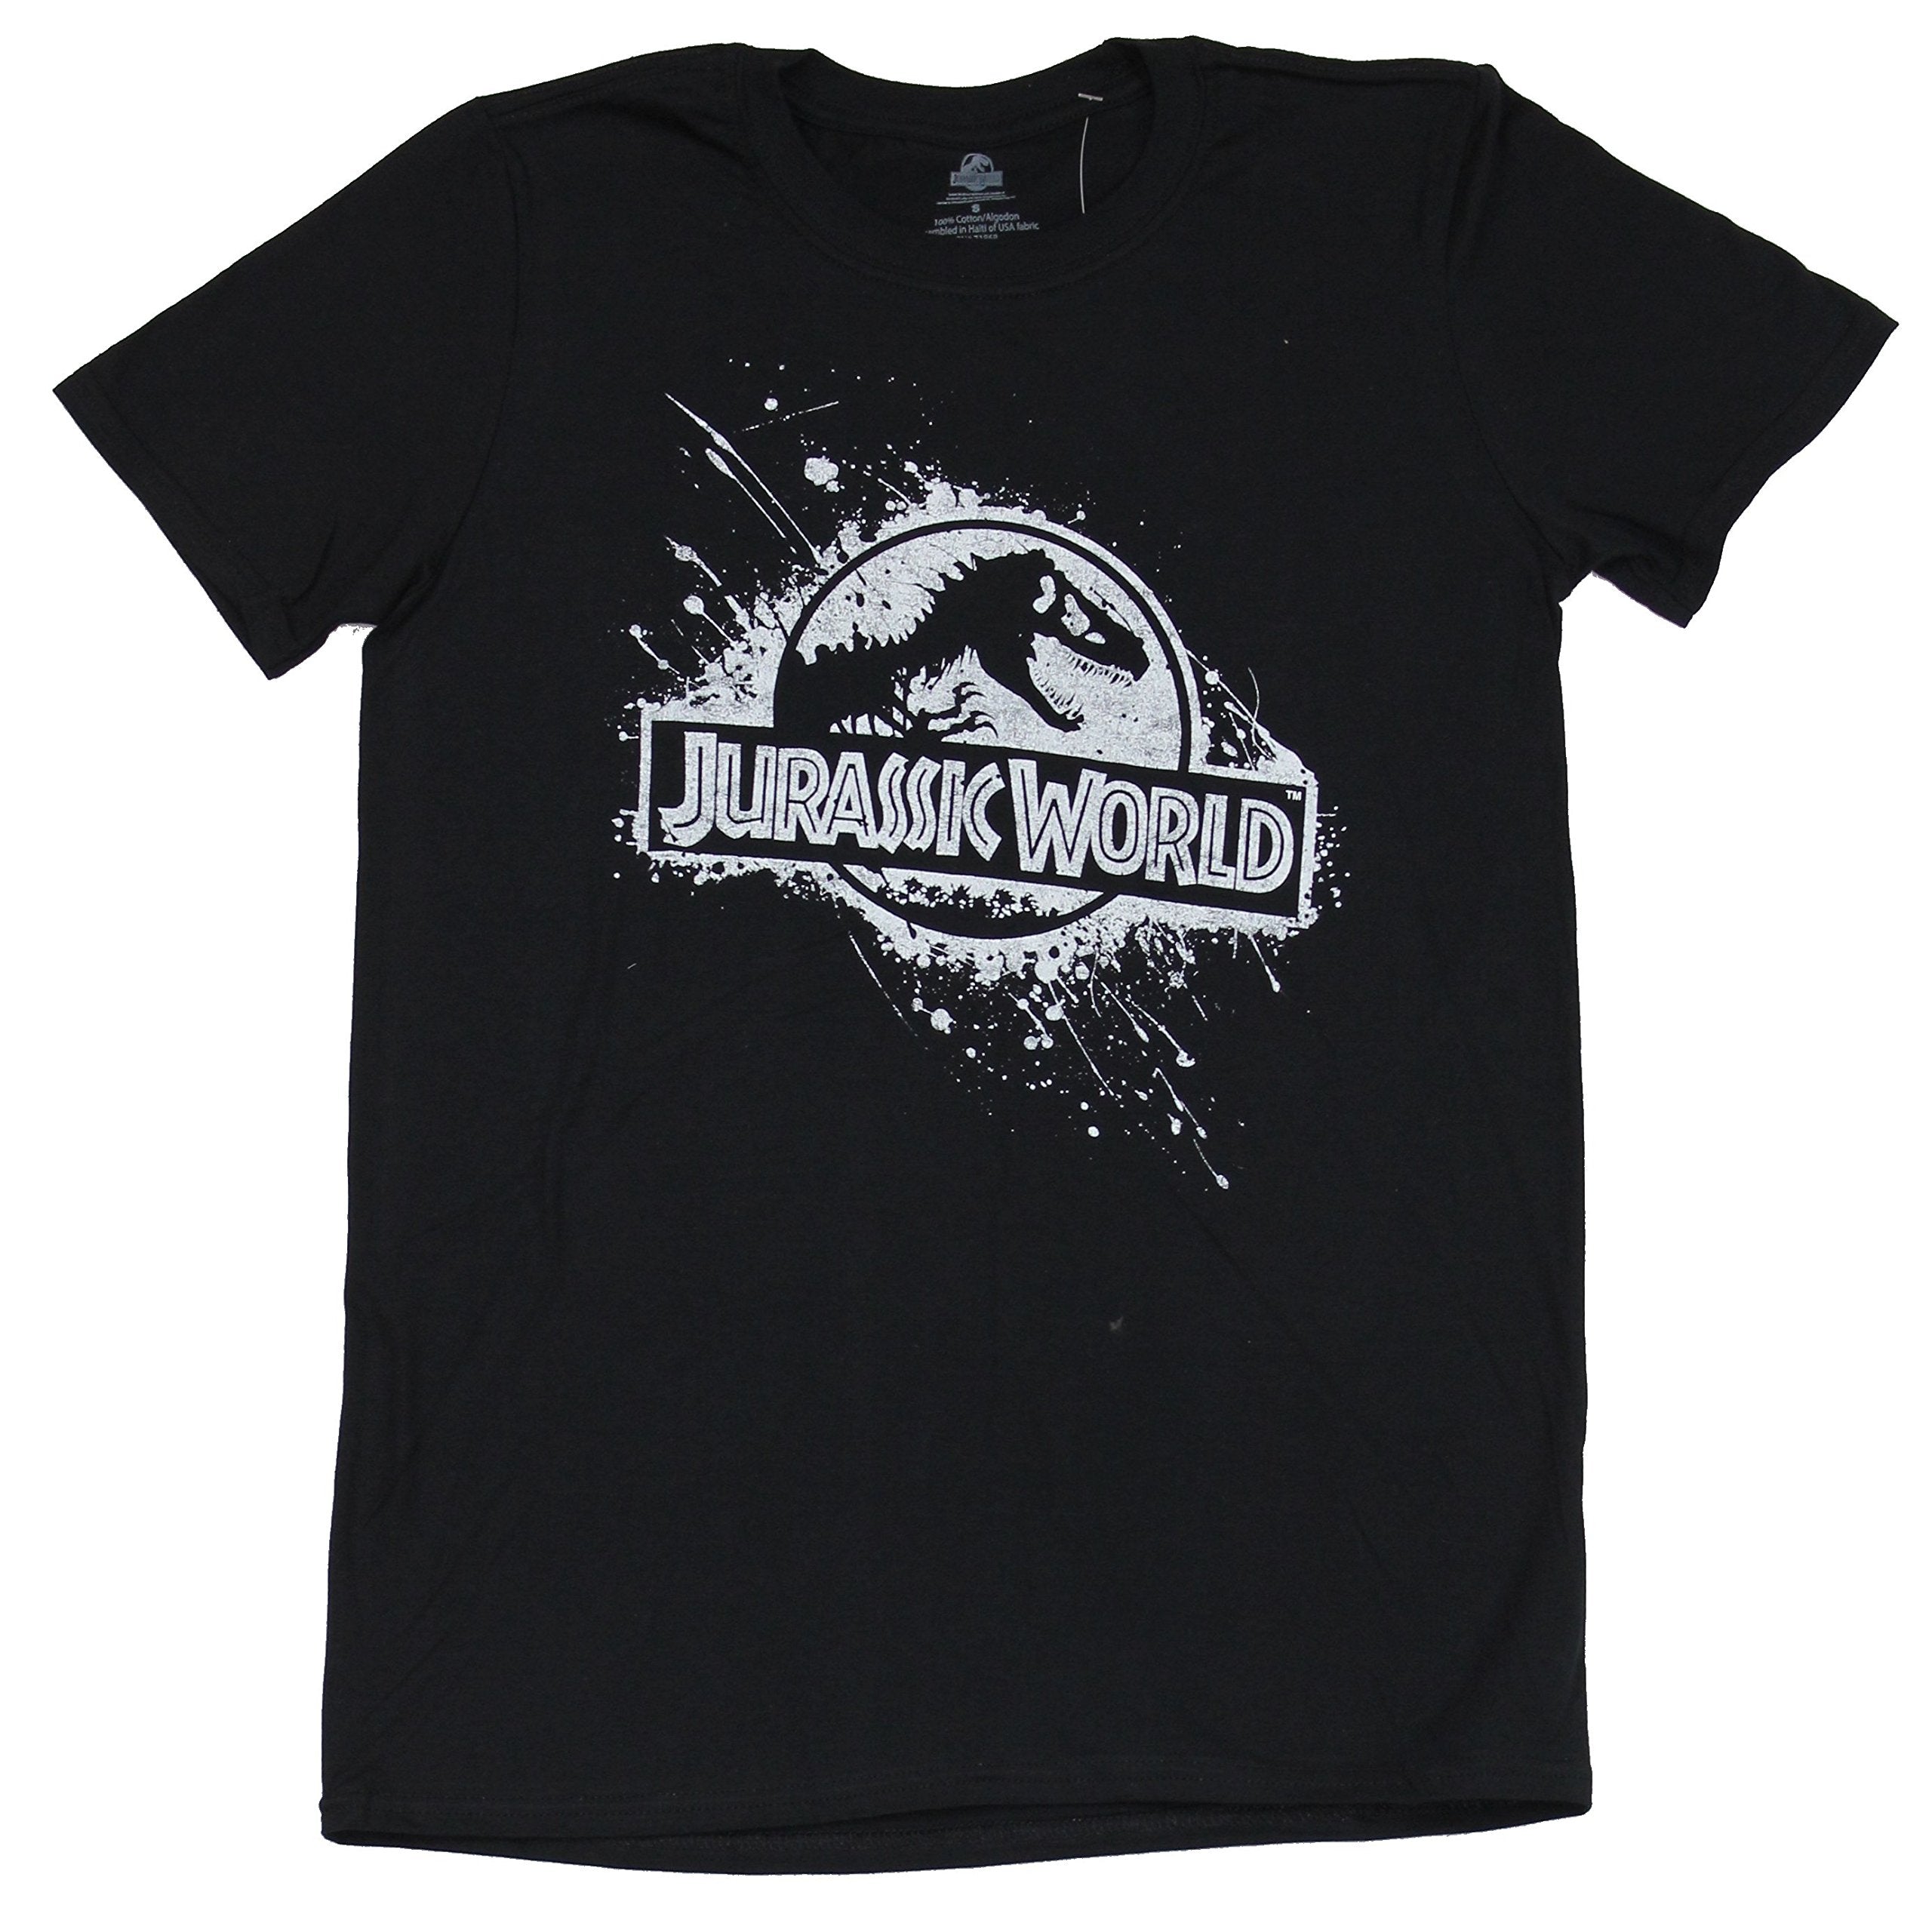 Jurassic Park World Mens T-Shirt - Distressed Splattery World Circle Logo